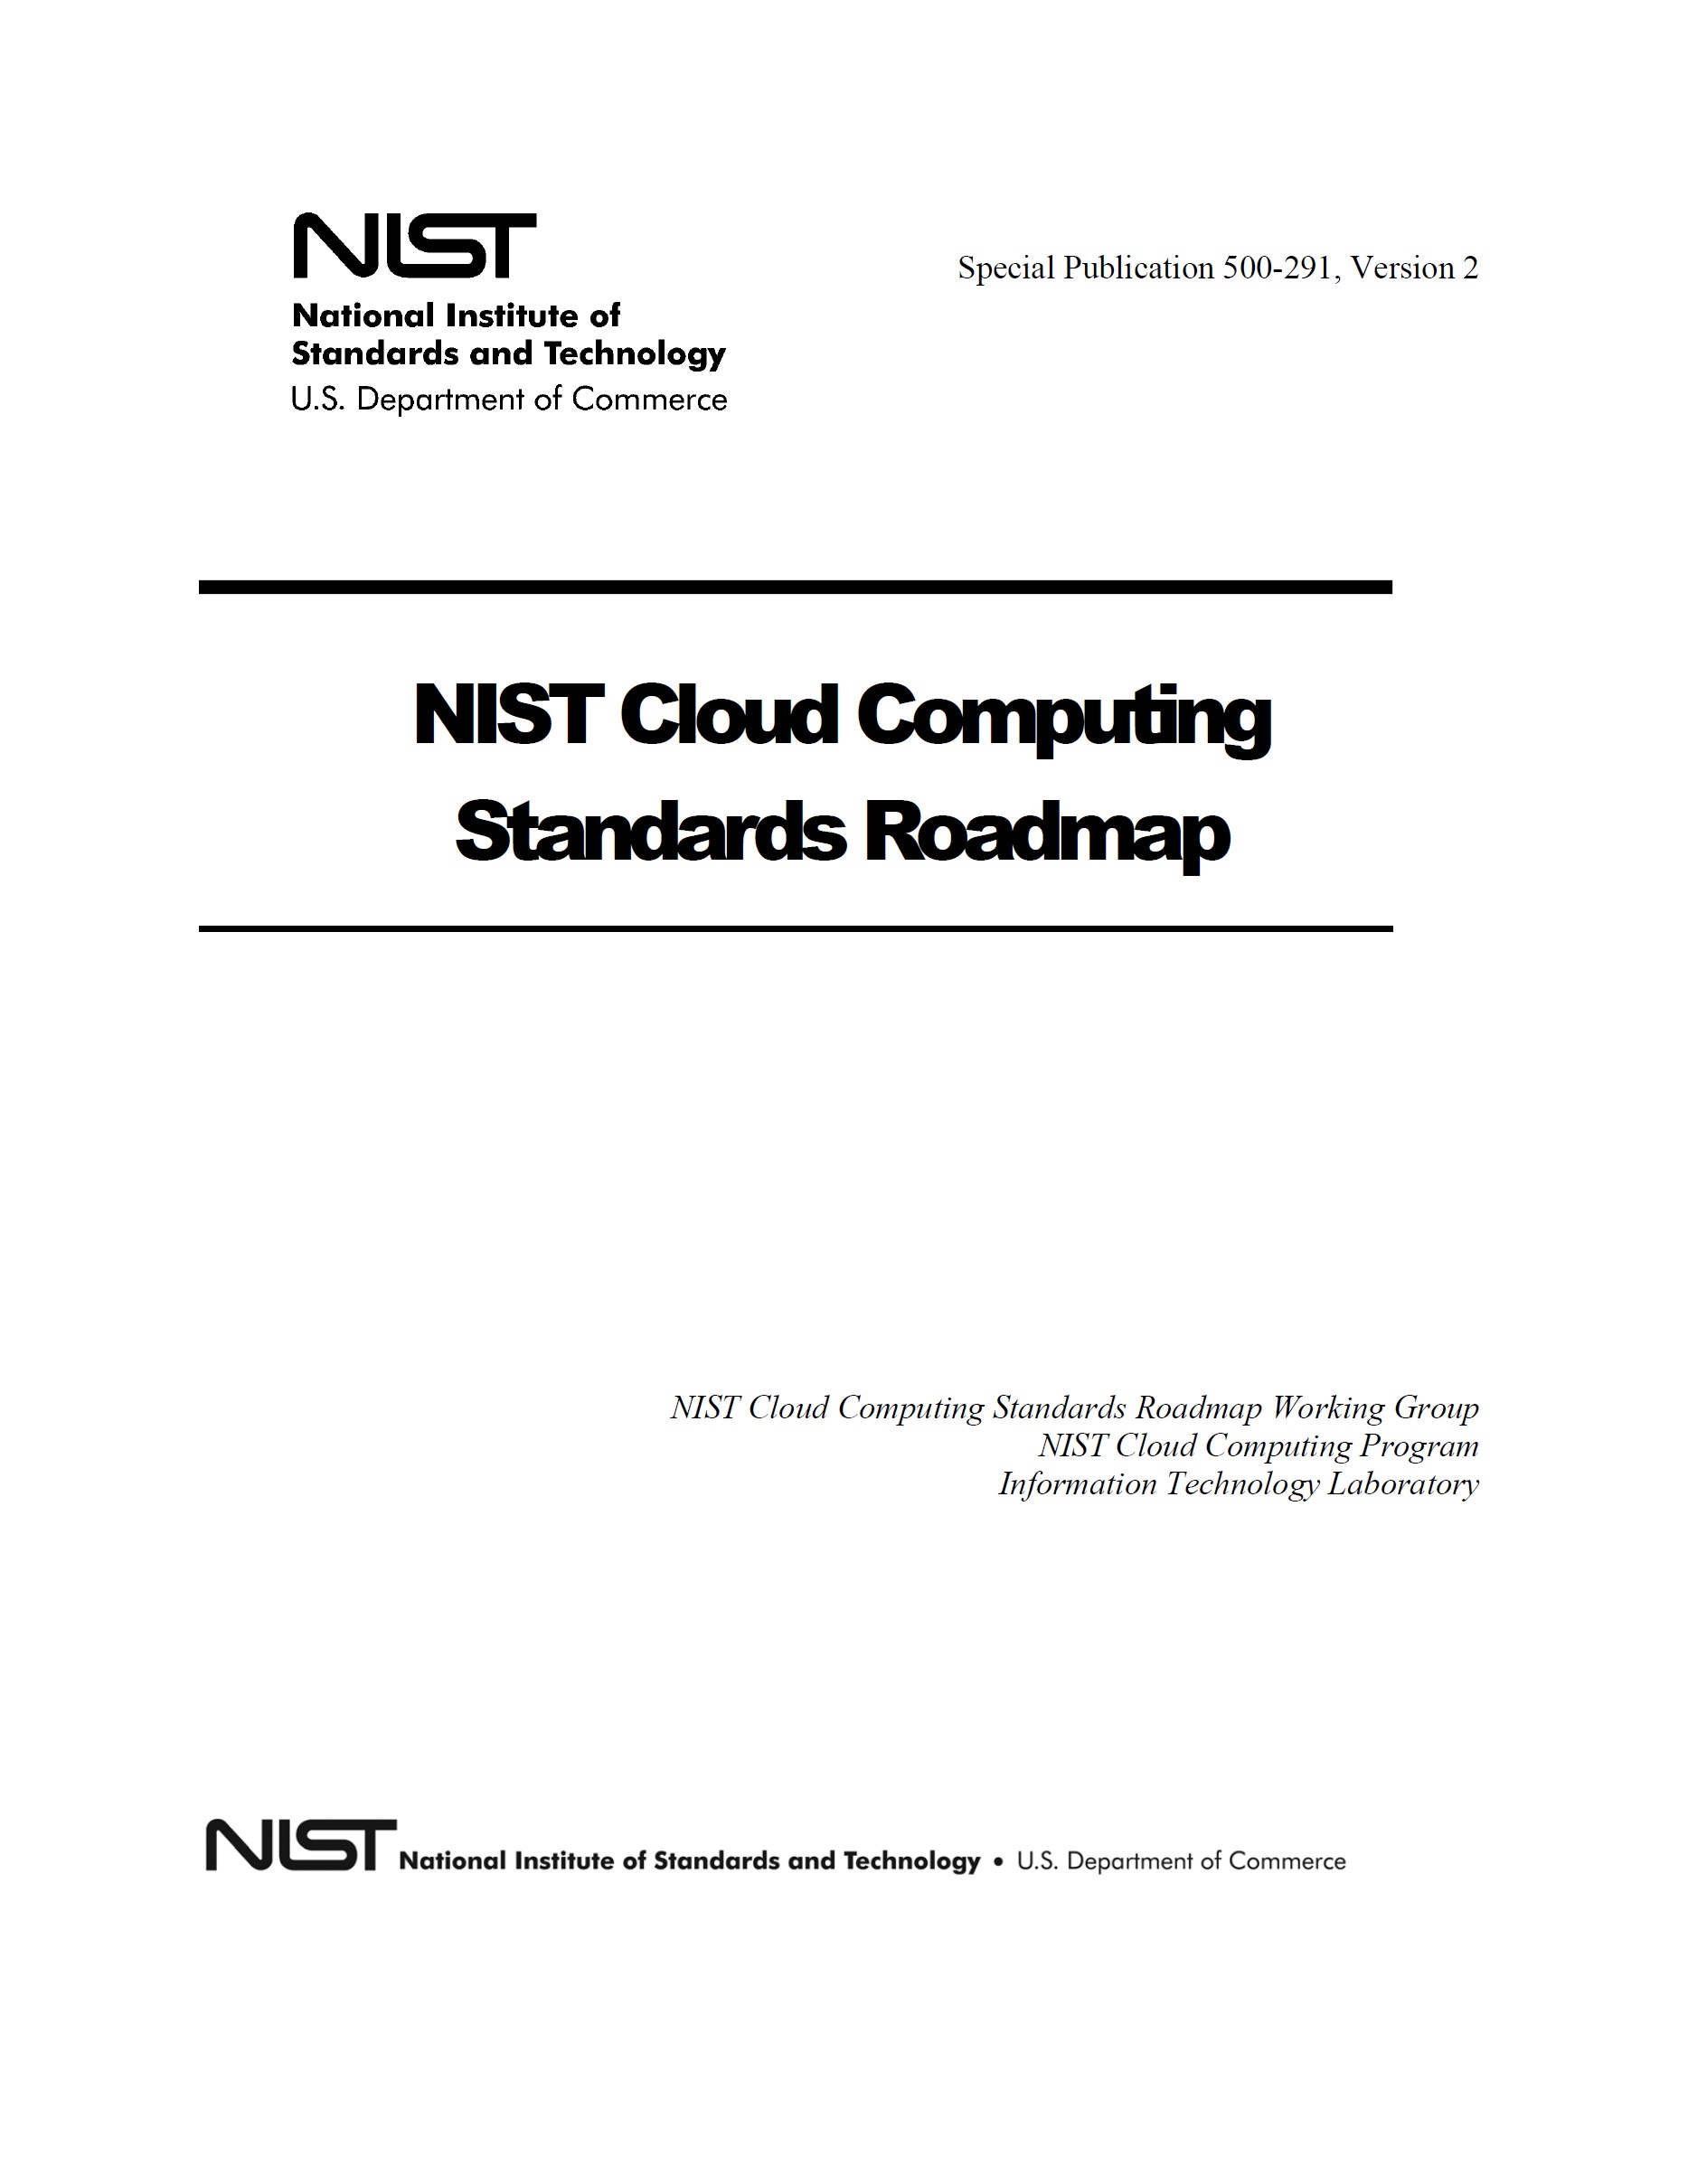 Cloud Computing Standards Roadmap – NIST